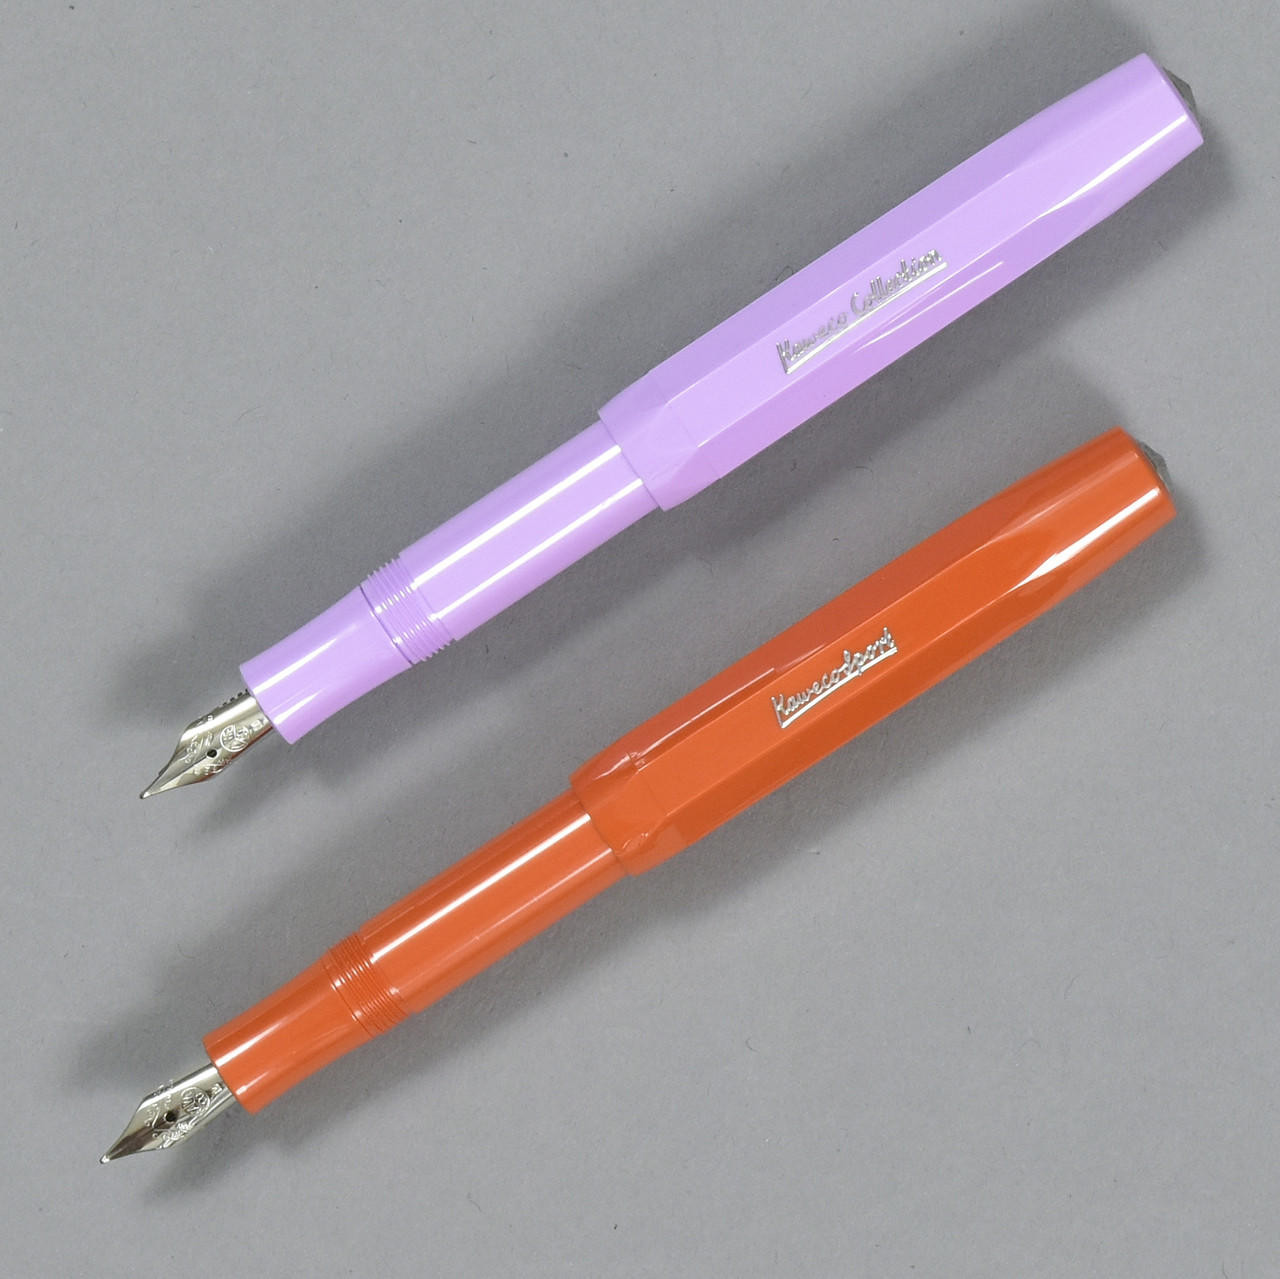 Kaweco Classic Sport Fountain Pen, Red, Medium Nib – Midoco Art & Office  Supplies